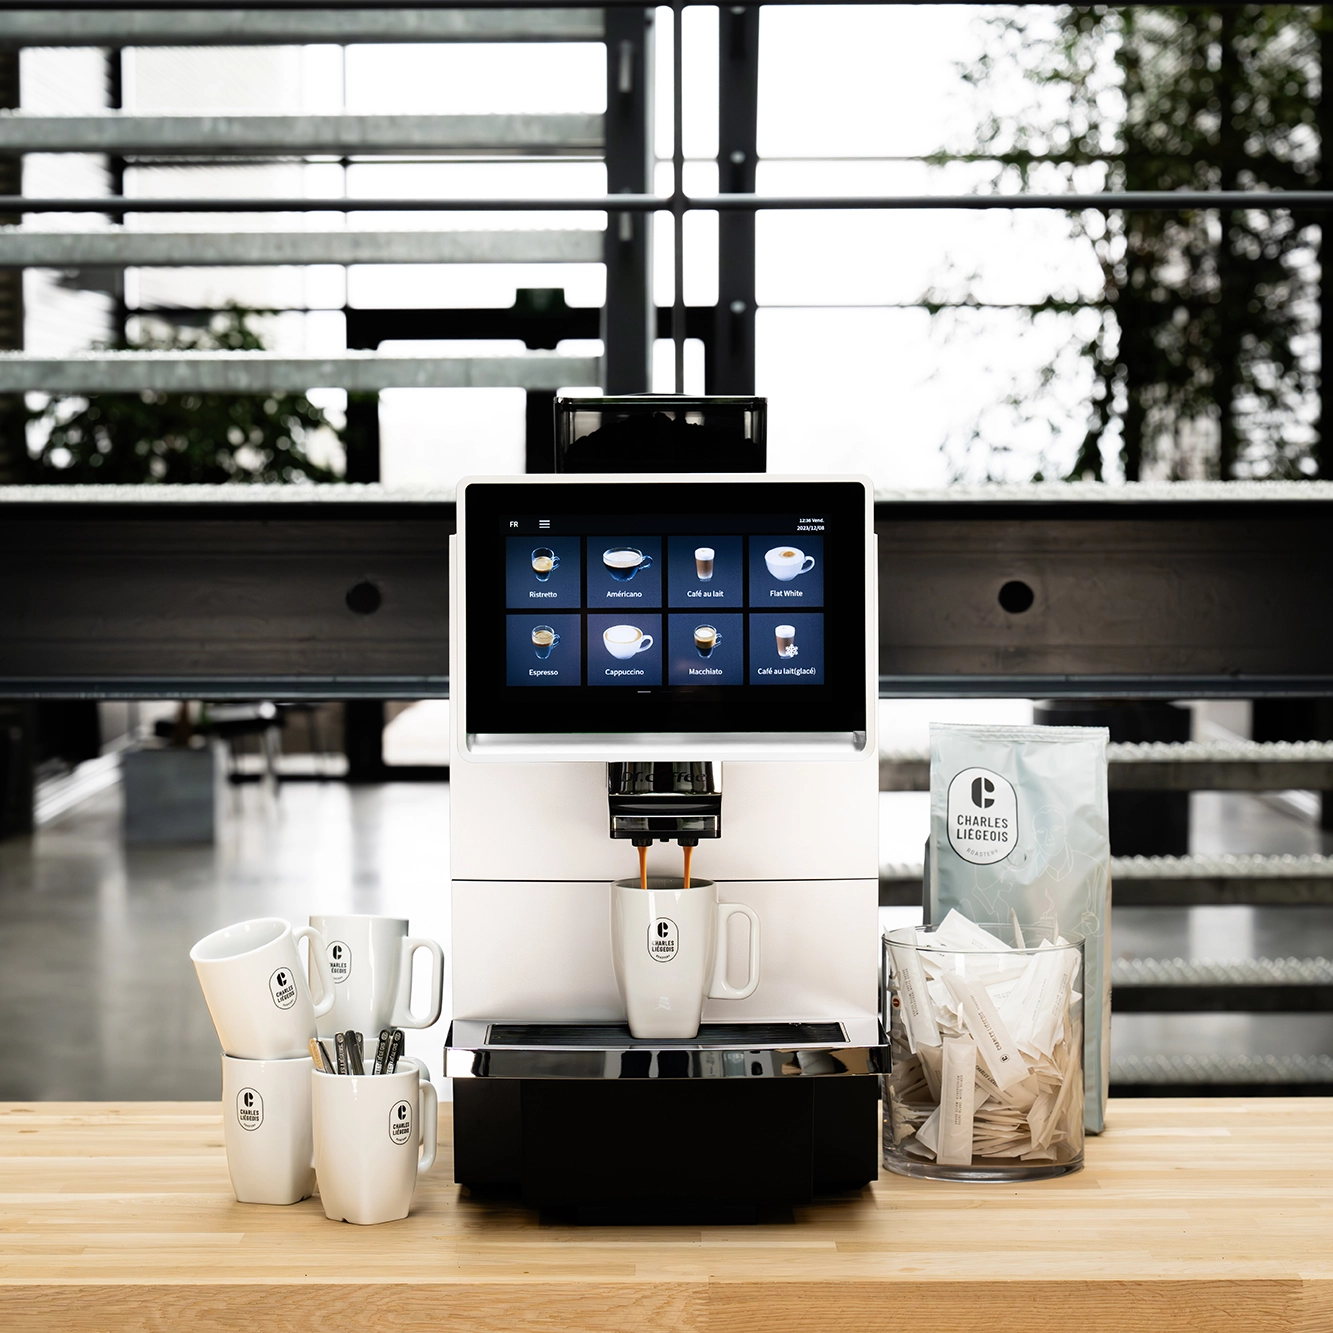 machine à café Dr Coffee avec spatules et mugs Charles Liégeois, café Mano Mano (bio et Fairtrade)